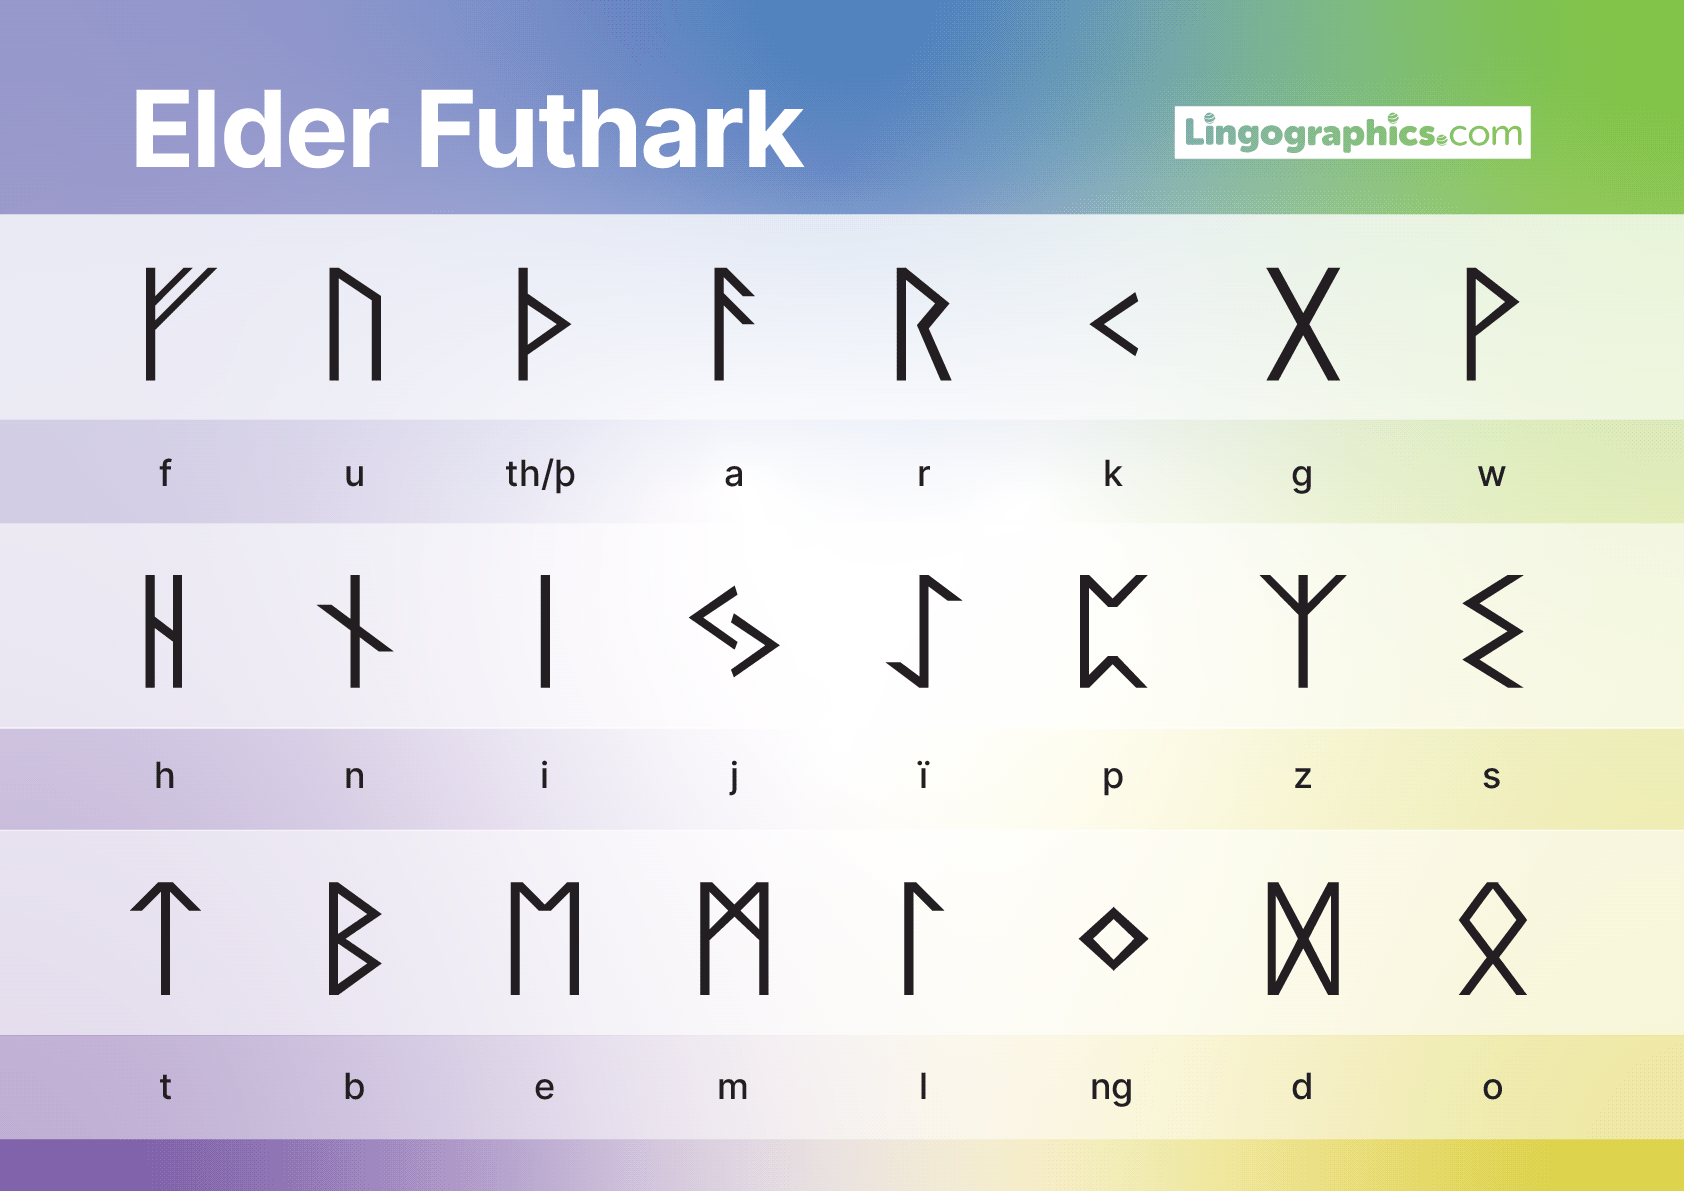 Elder Futhark with transliteration